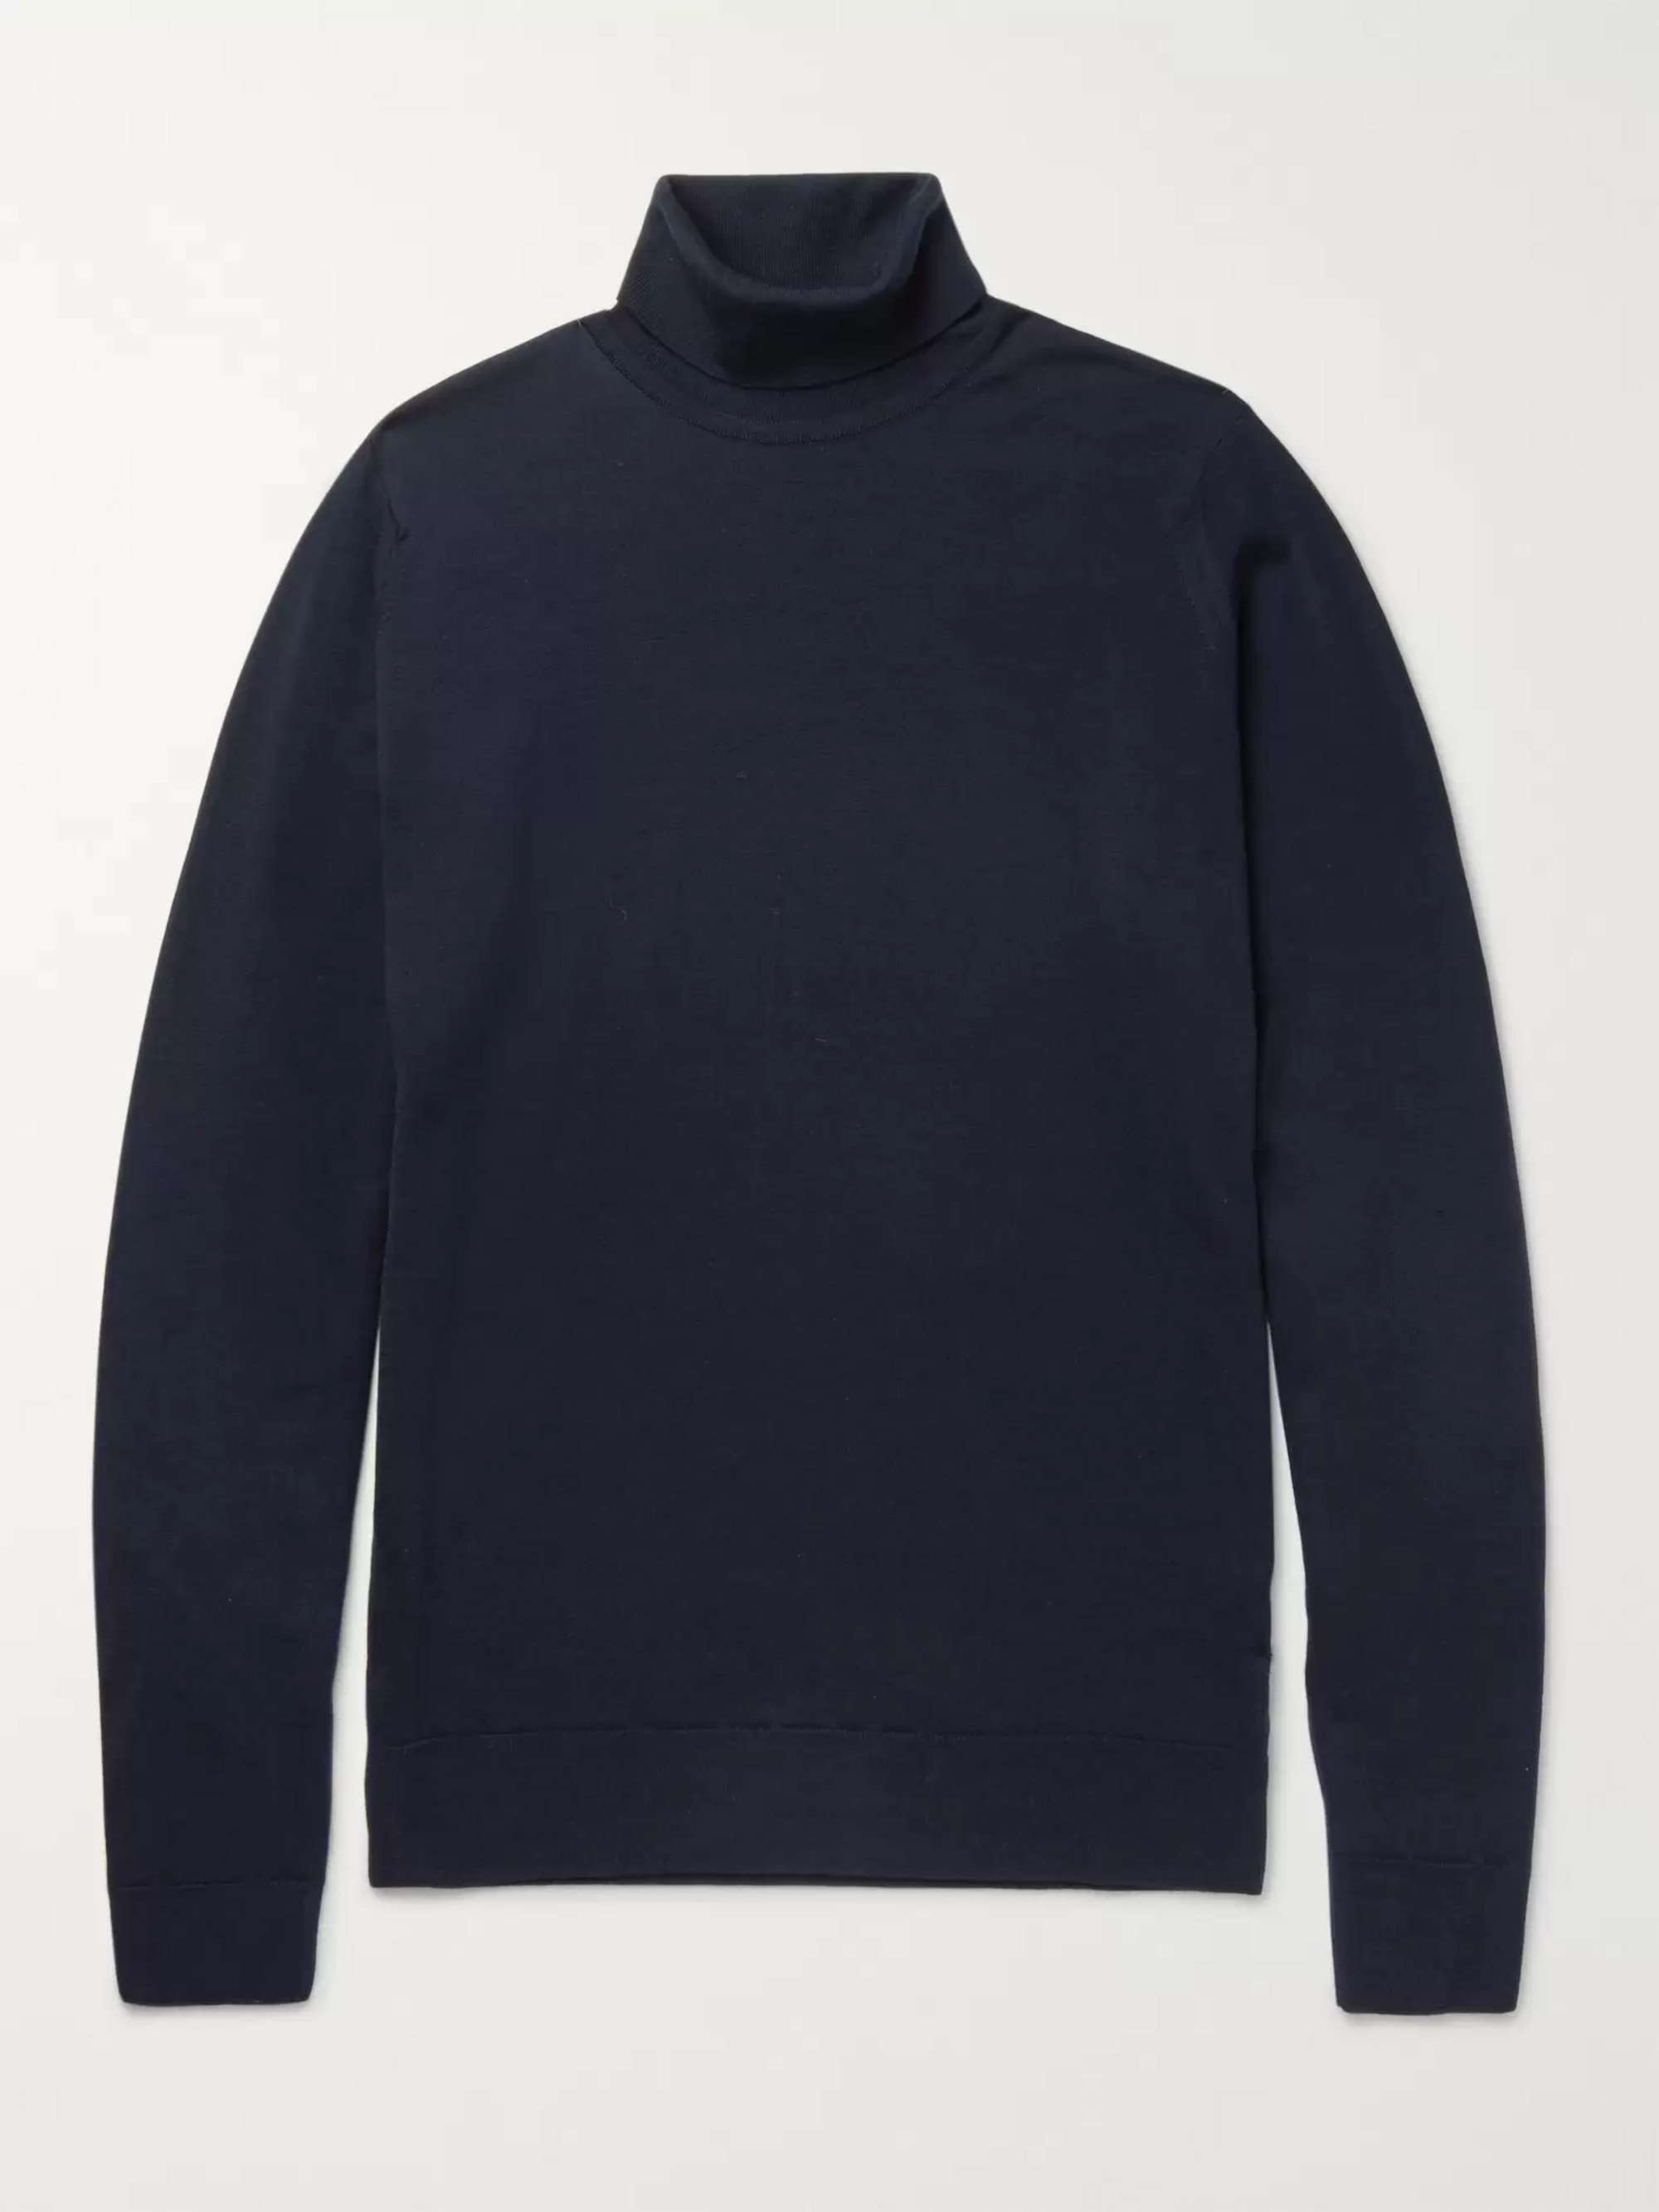 Midnight blue Cherwell Merino Wool Rollneck Sweater | JOHN SMEDLEY | MR  PORTER